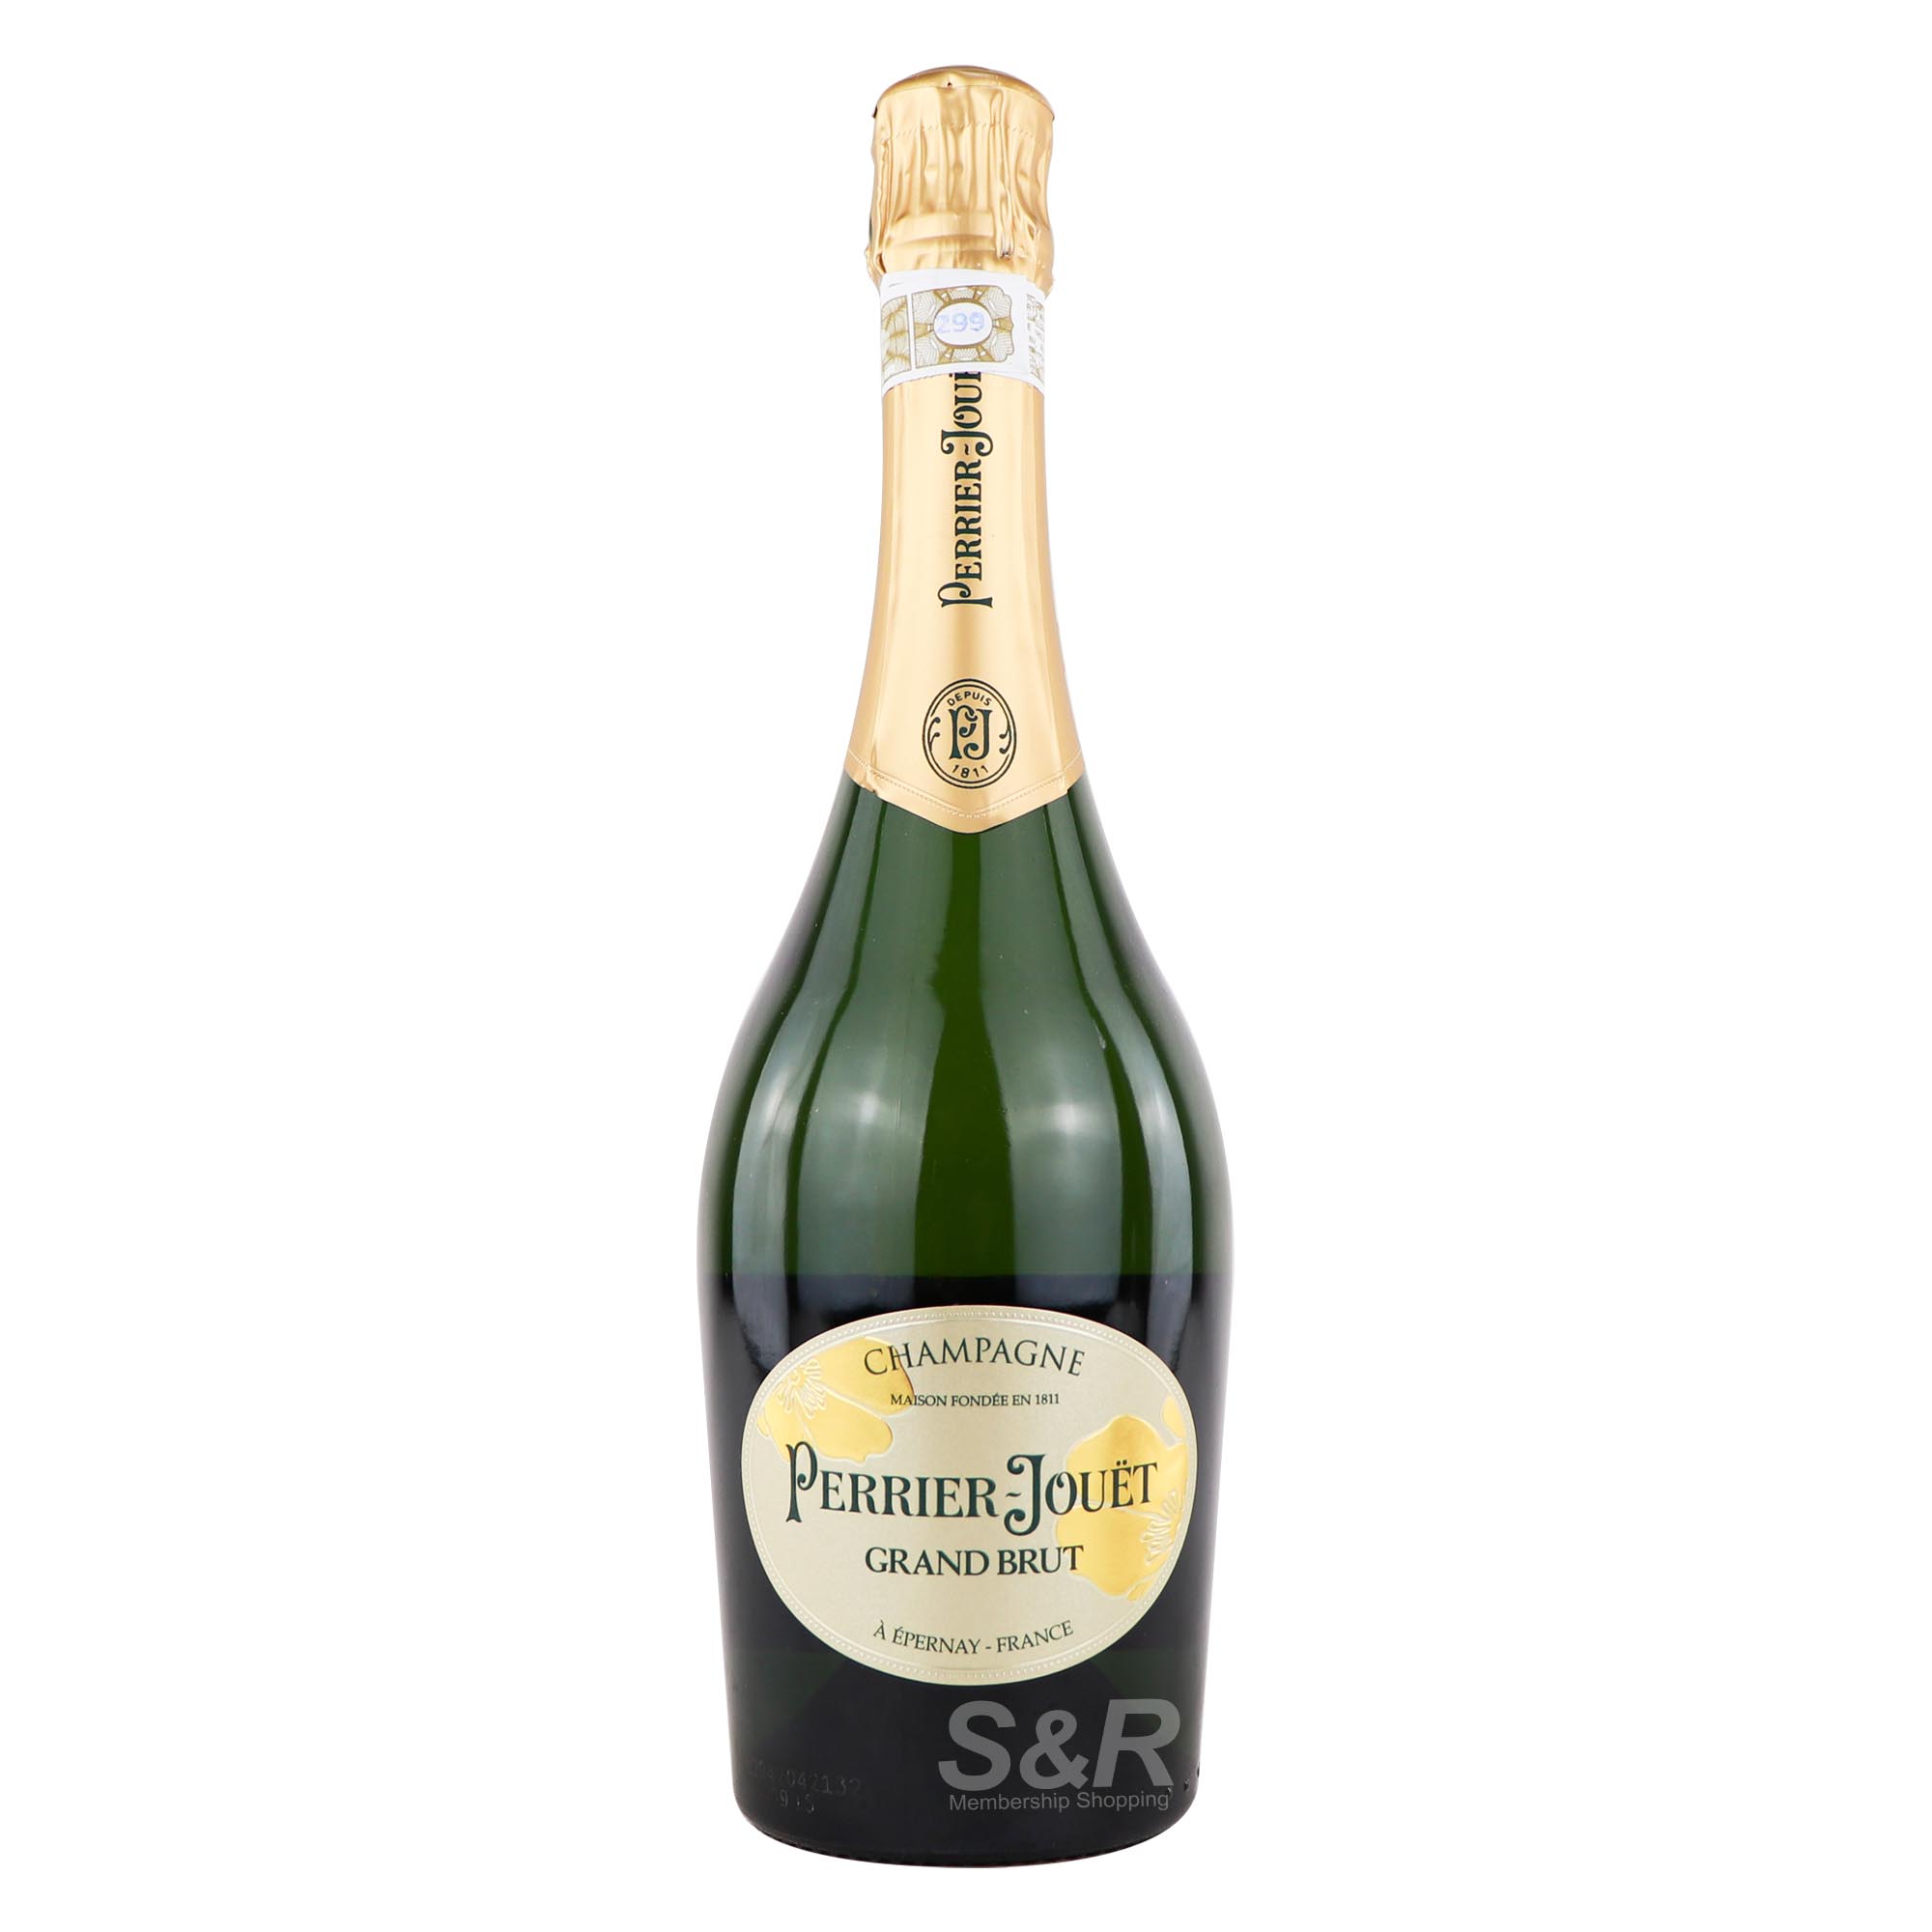 Perrier-Jouet Grand Brut Champagne 750mL